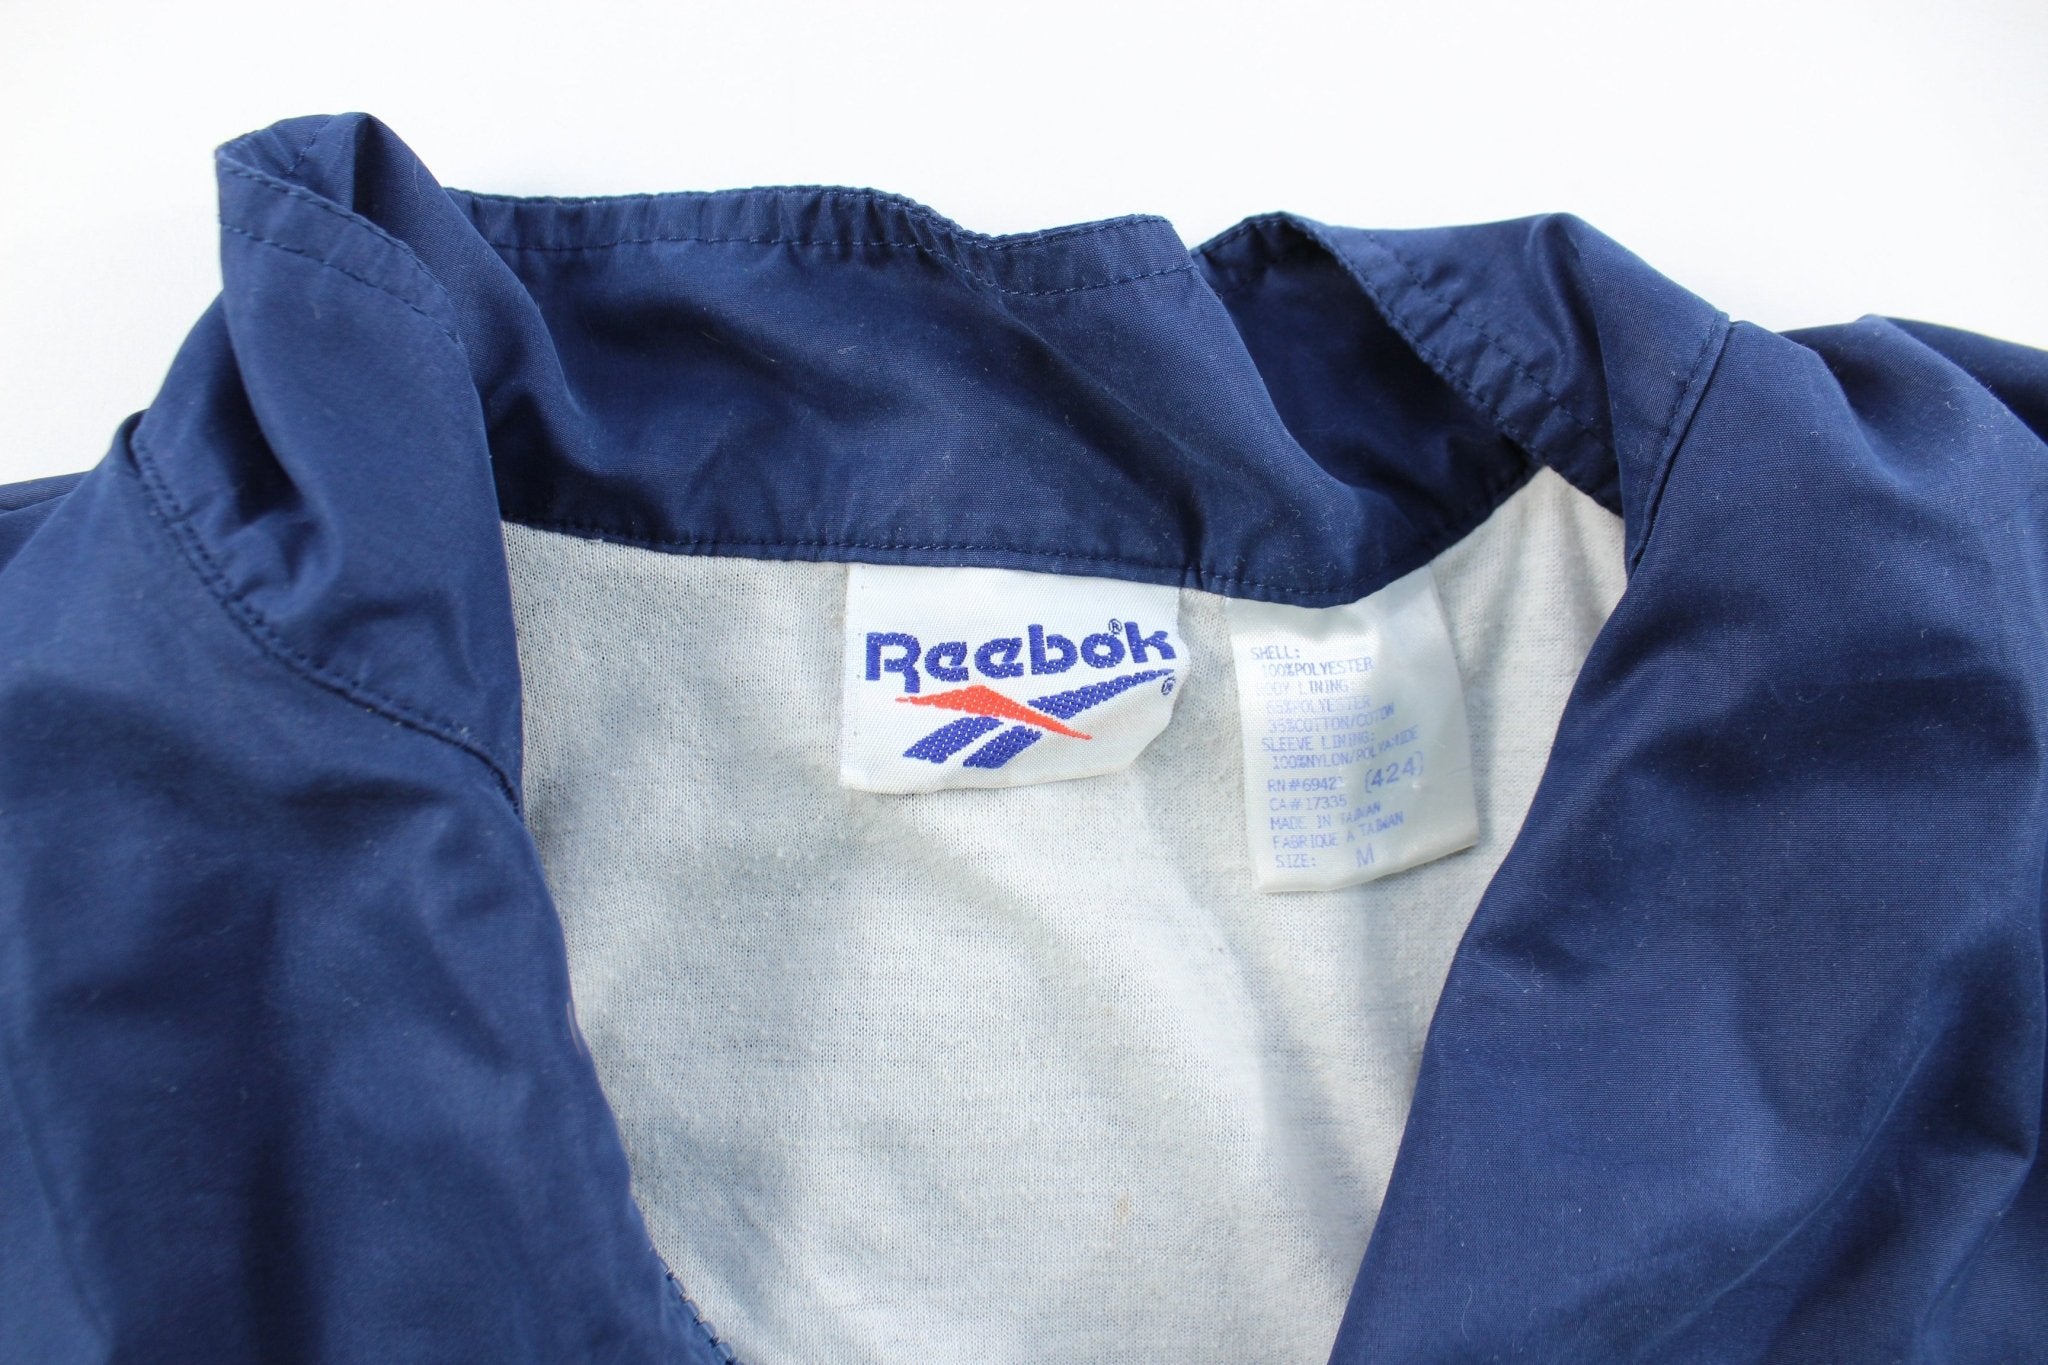 Reebok Embroidered Logo Navy Blue & Purple Zip Up Jacket - ThriftedThreads.com